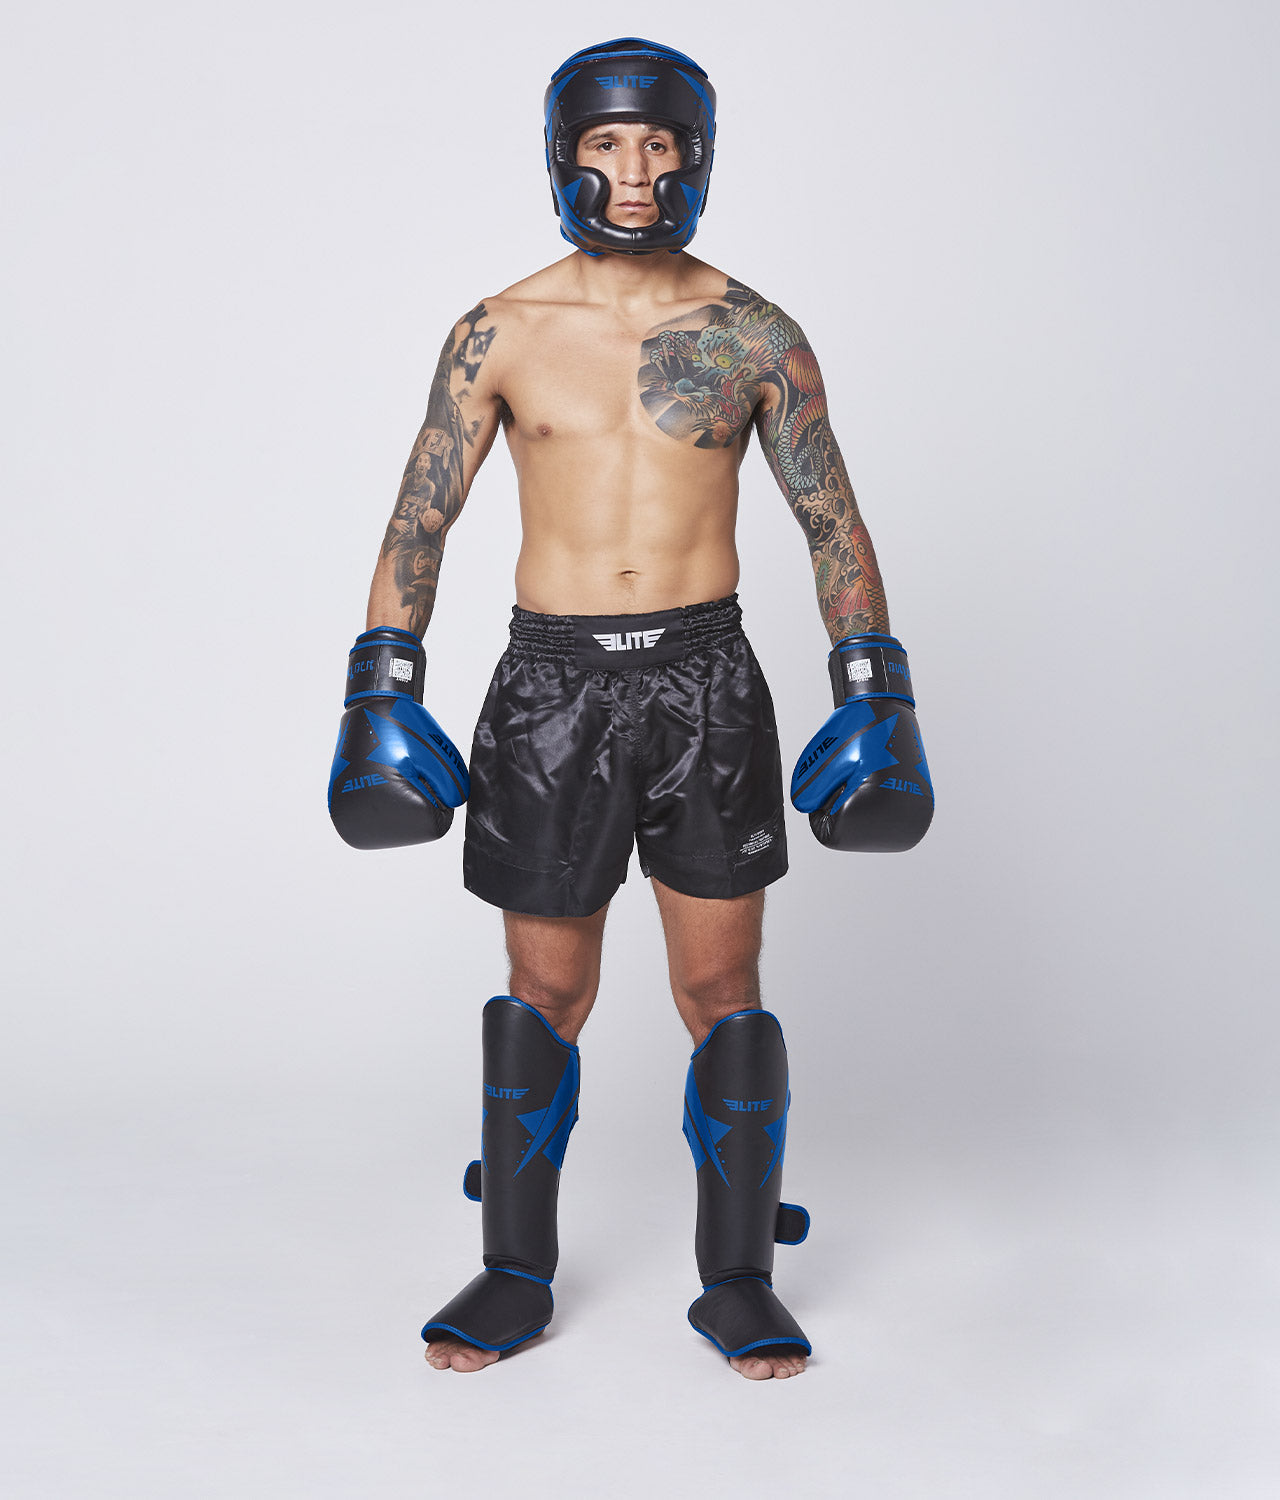 Elite Sports Adults' Star Sparring Black/Blue Boxing Headgear